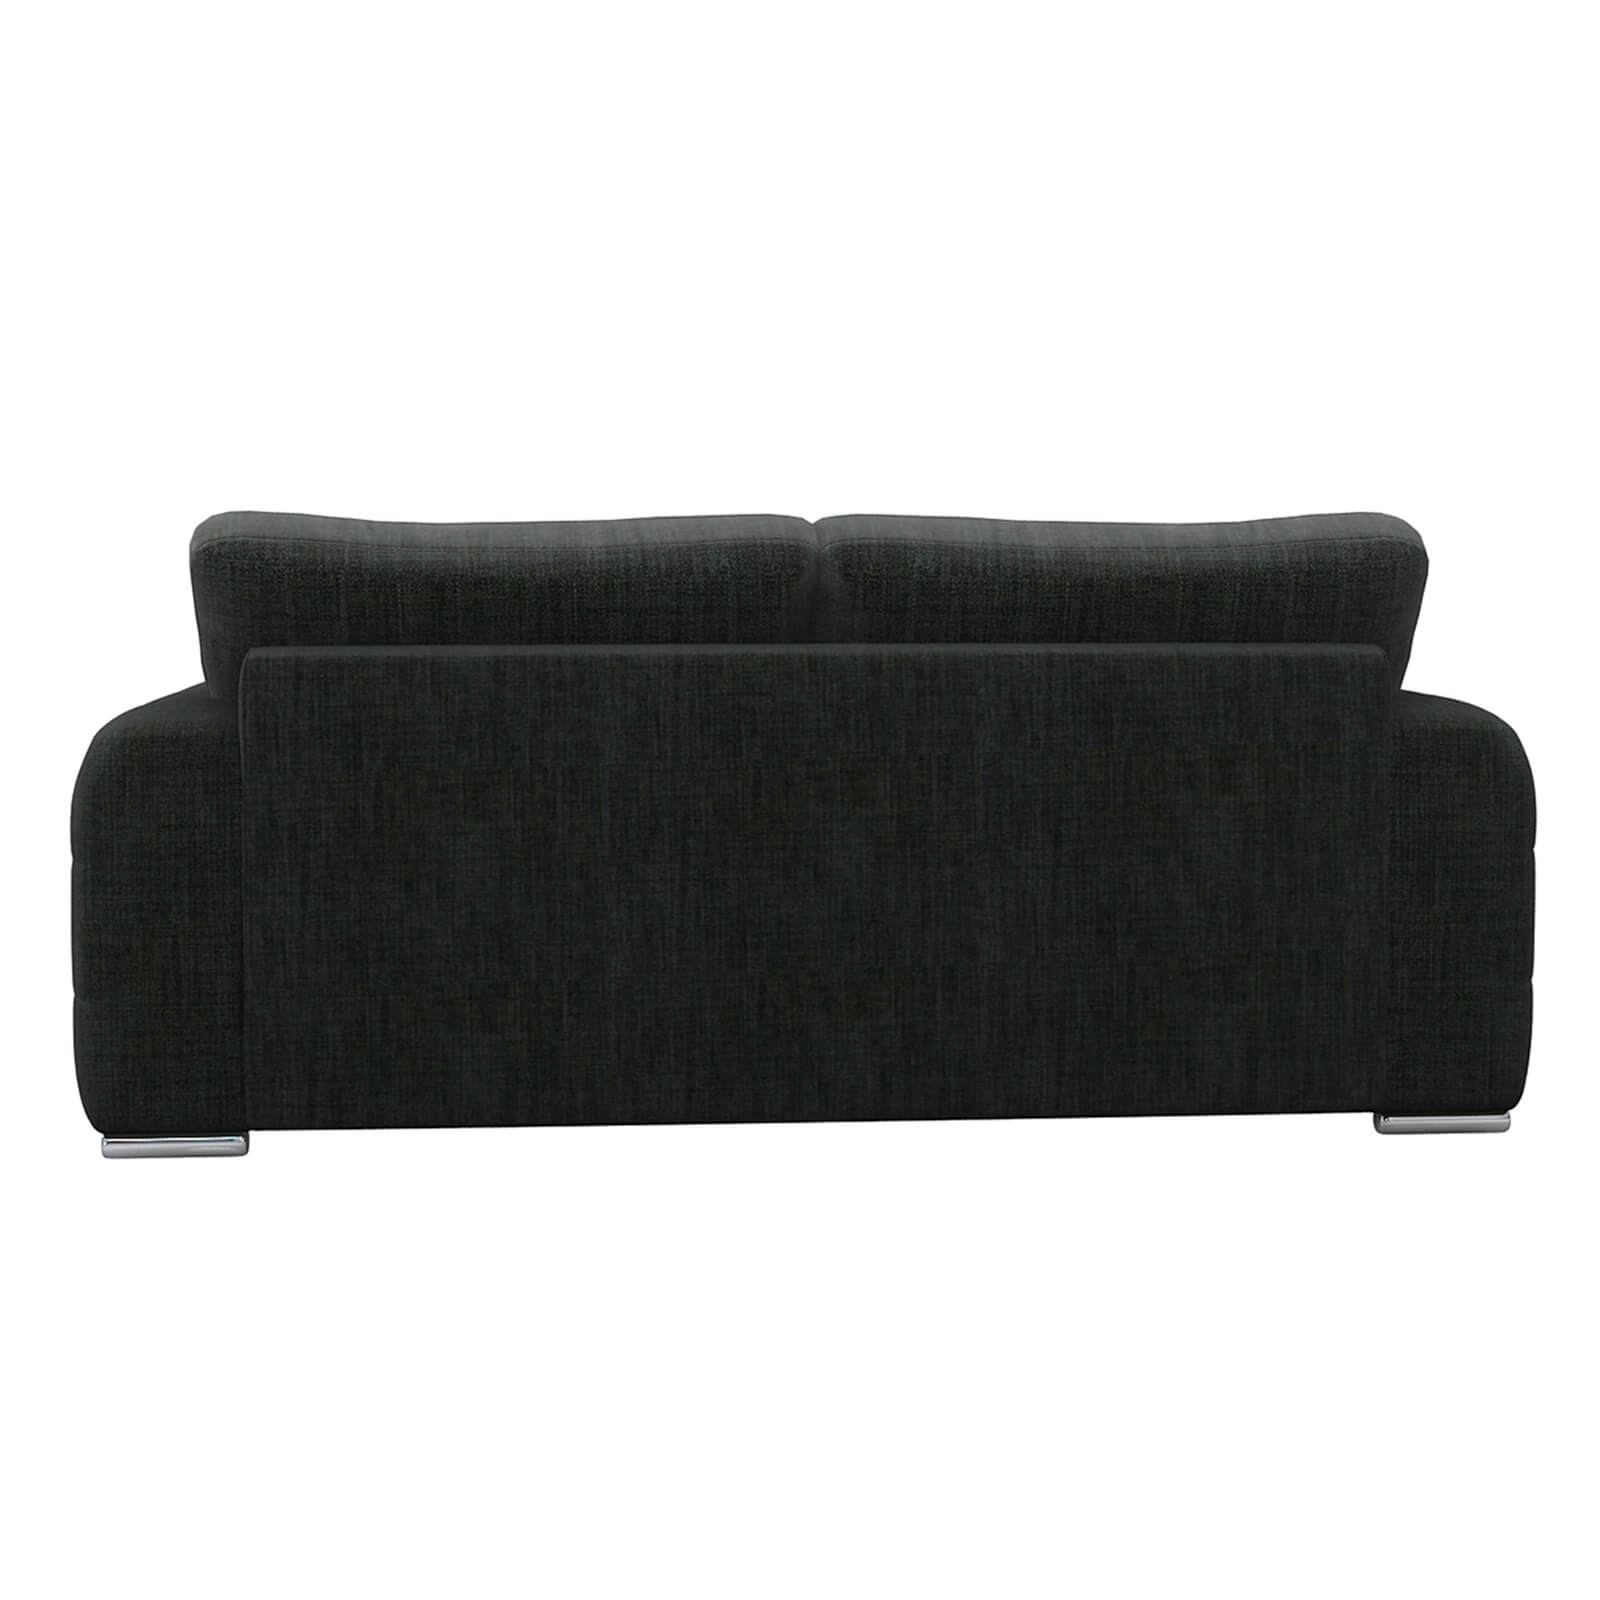 Amethyst 2 Seater Sofa - Charcoal